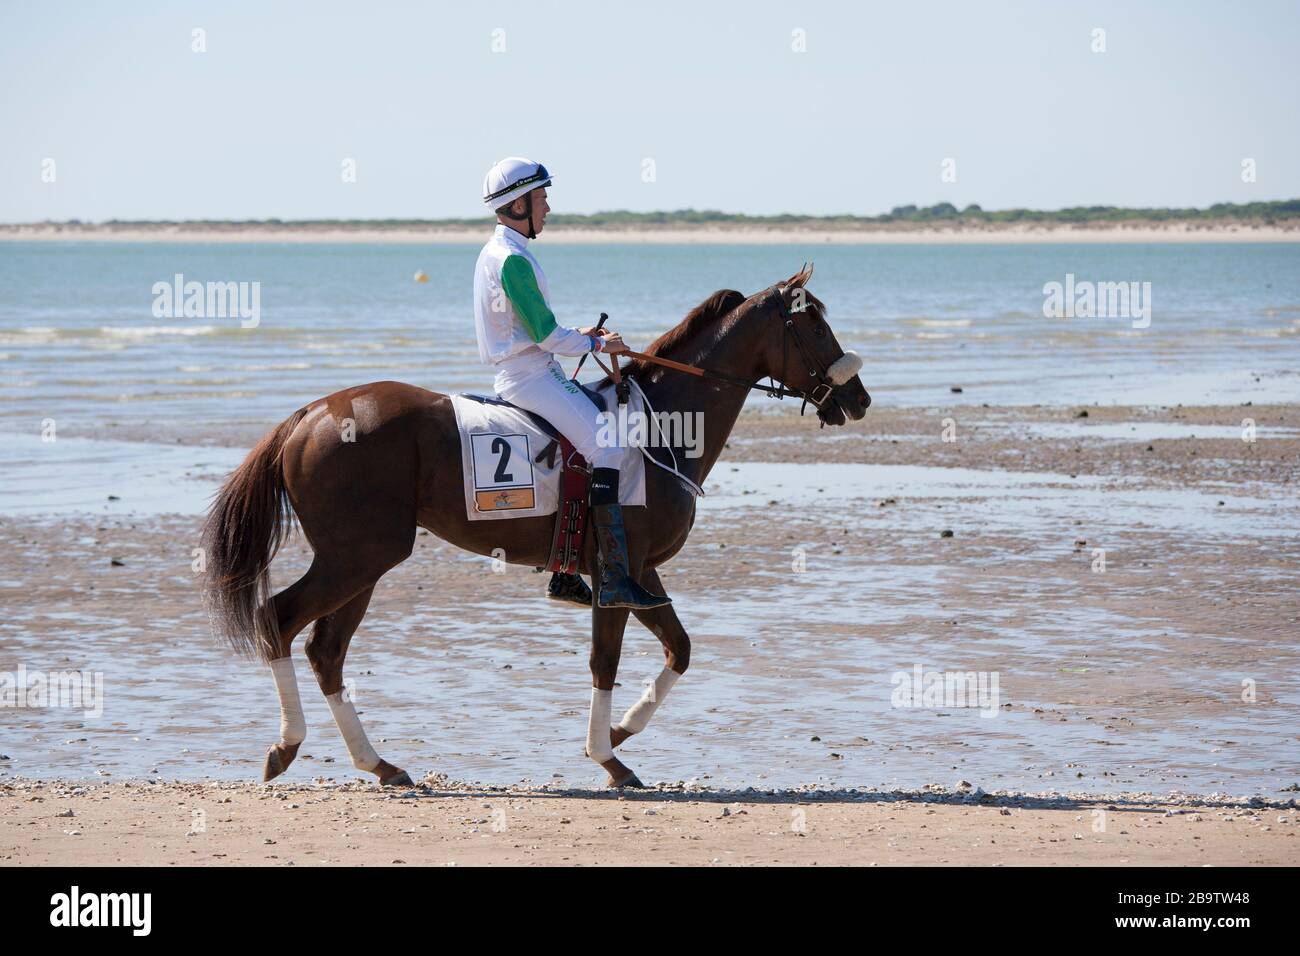 A horse and rider at the annual August horserace meeting run on the beach at Sanlucar de Barrameda, Cadiz, Spain. 3rd August 2017. Stock Photo